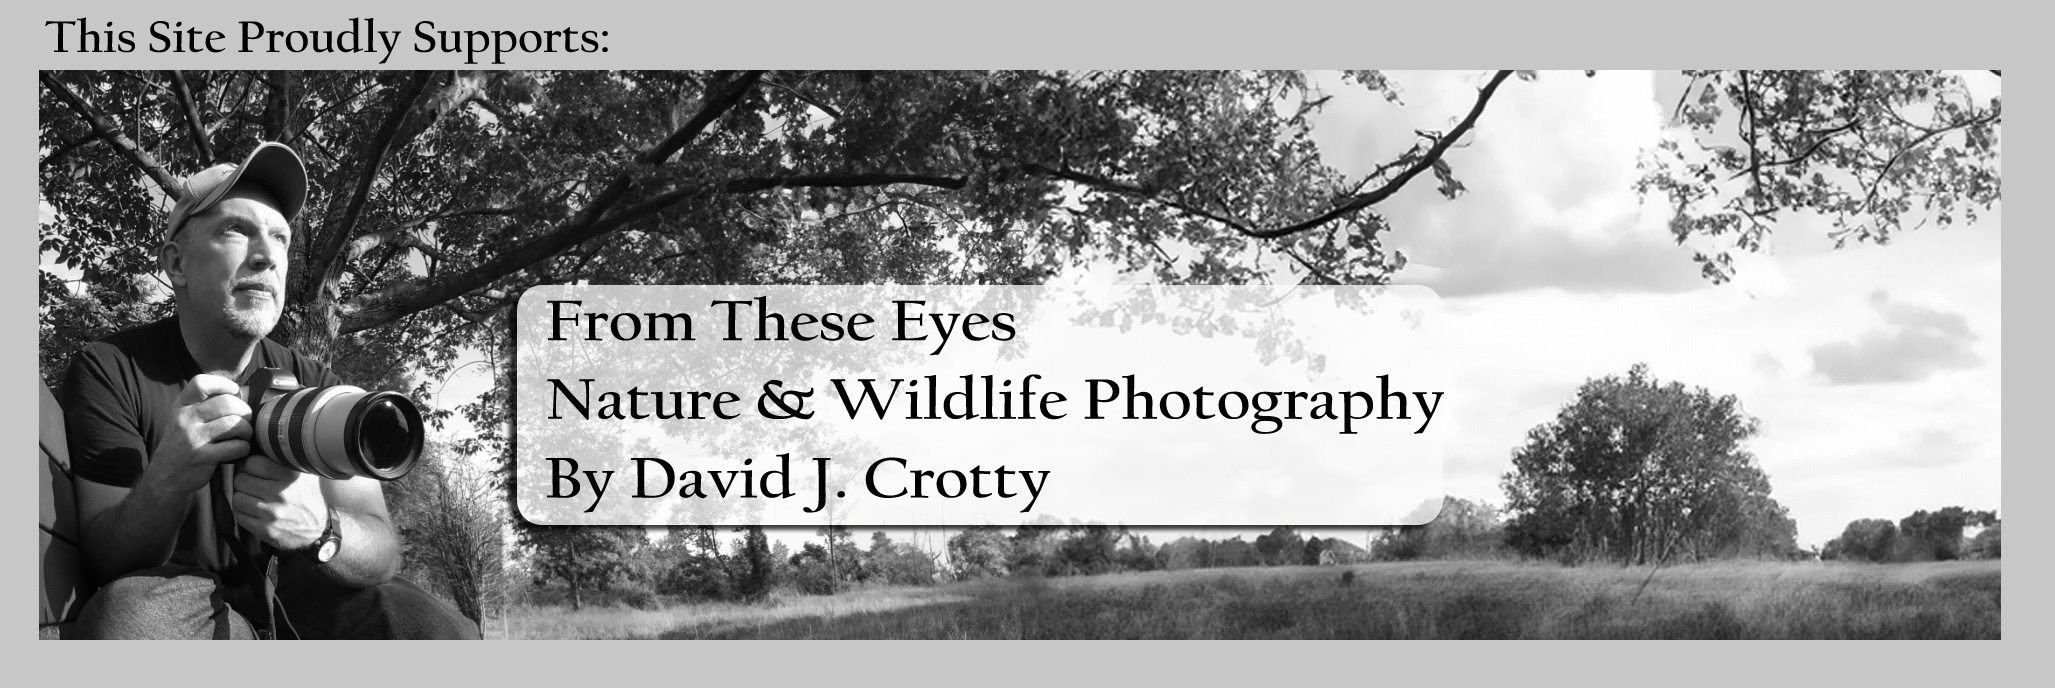 David J. Crotty Photography on Etsy